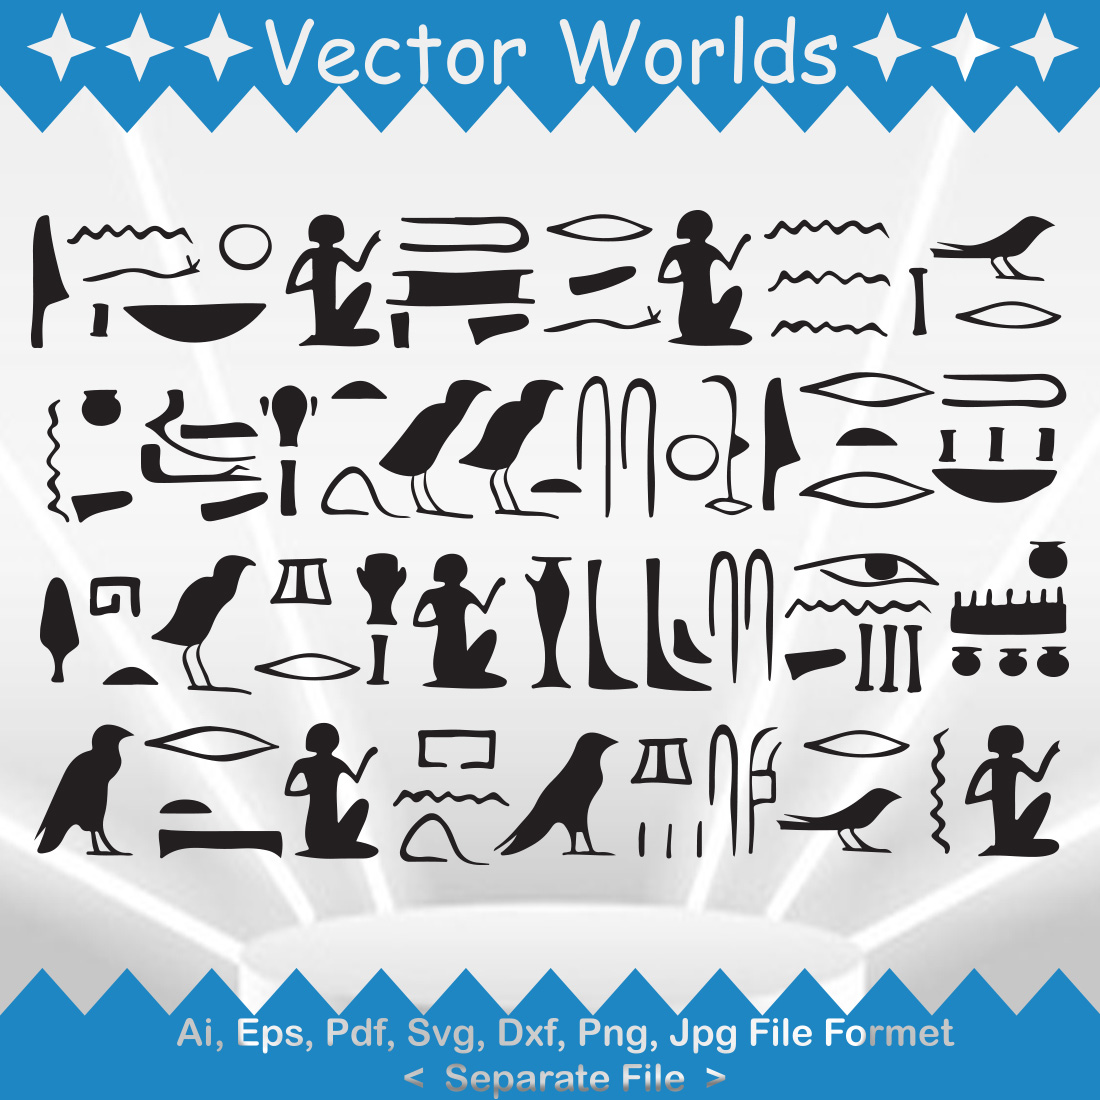 Egyptian Hieroglyphs SVG Vector Design cover image.